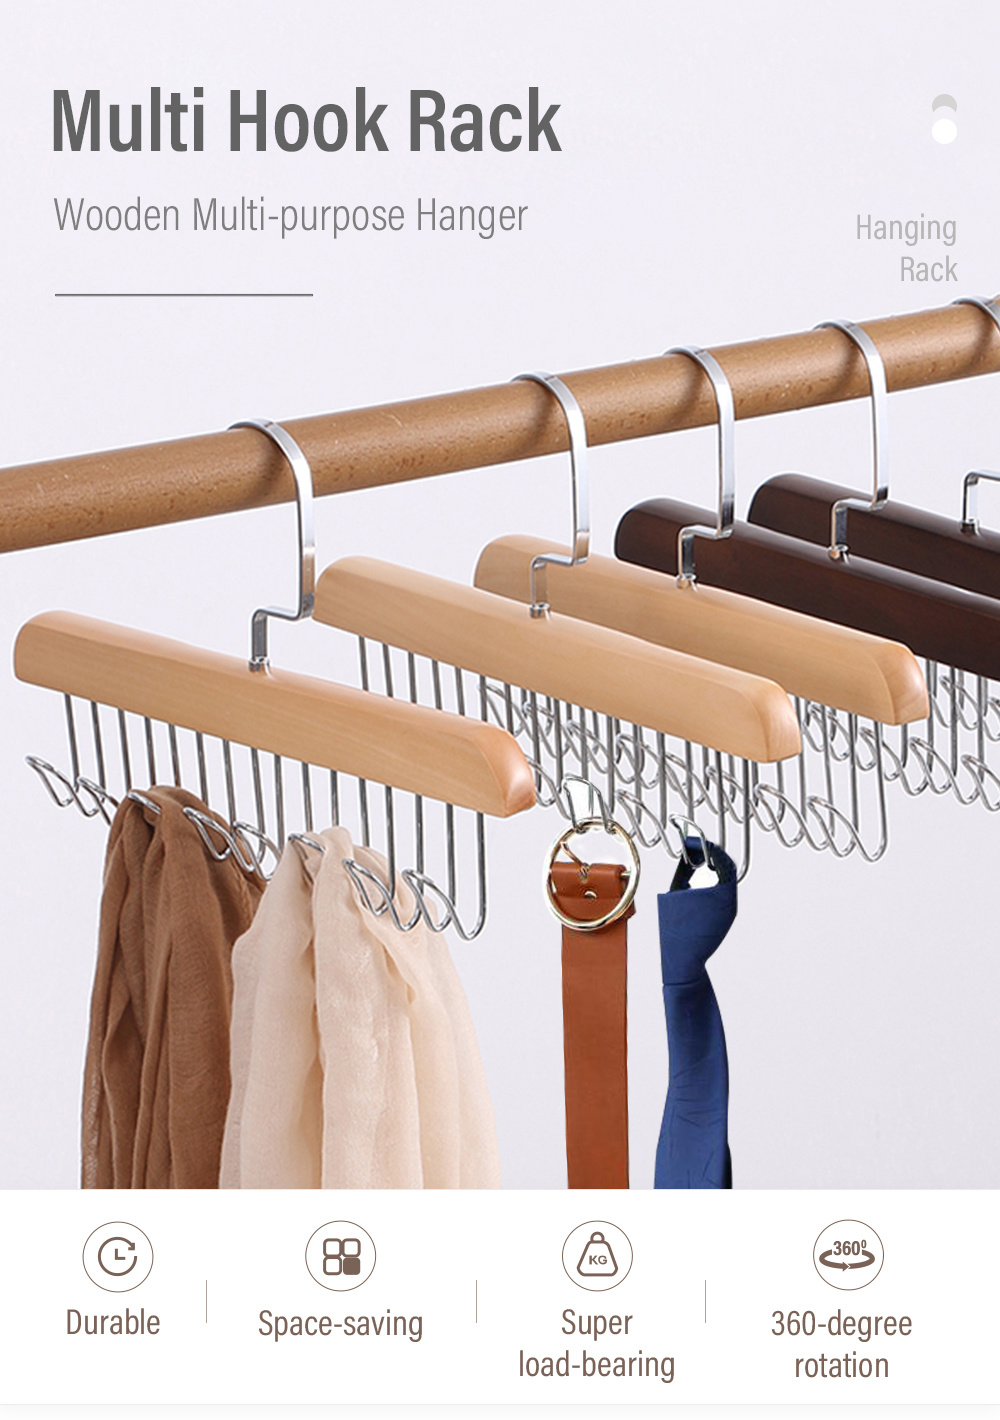 Wooden Multi Hook Rack Multi-purpose Hanging Hanger-1